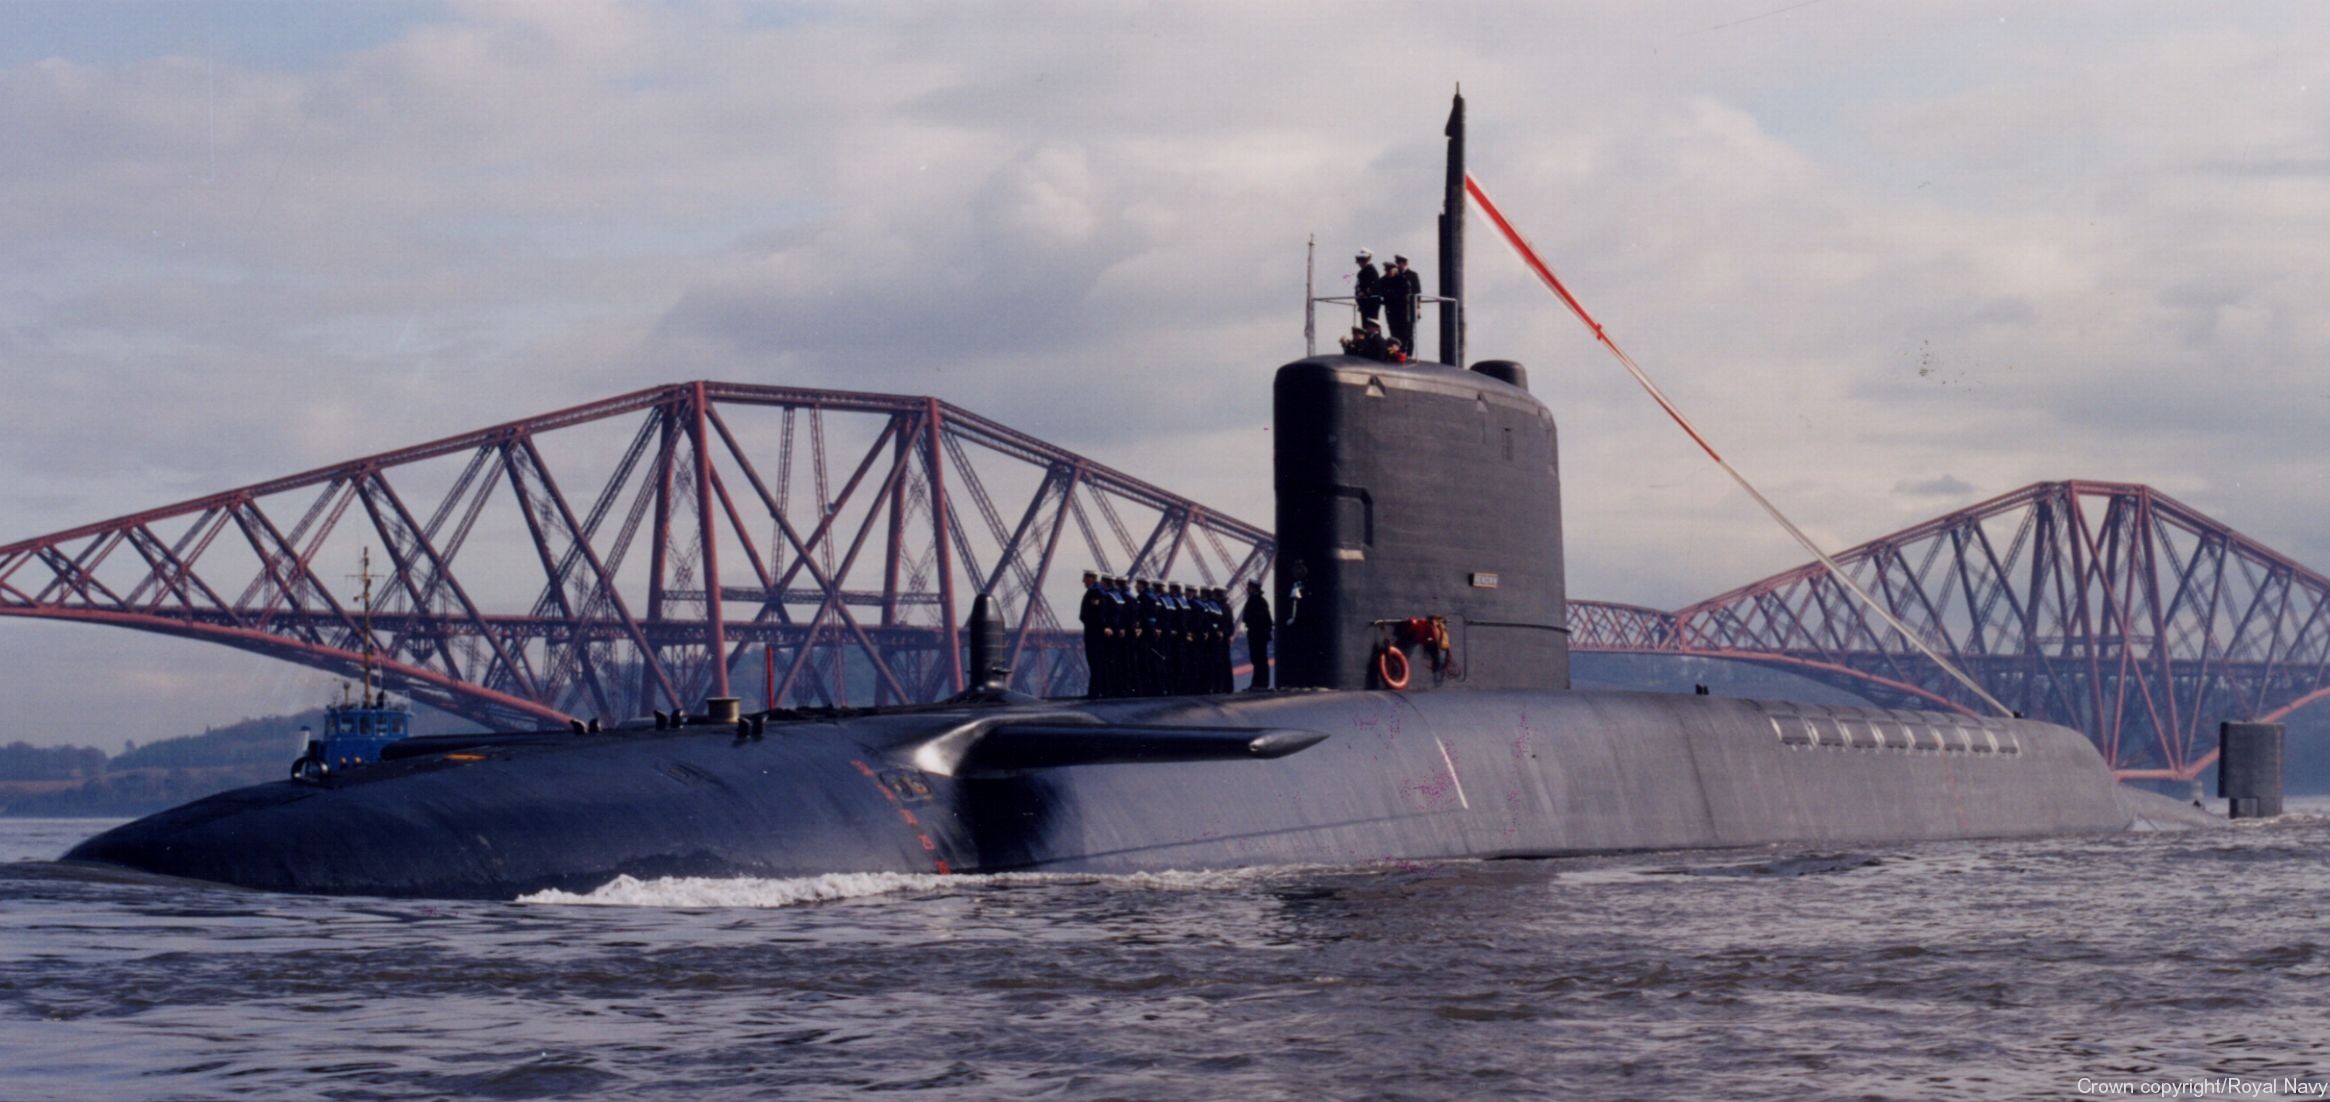 s26 hms renown resolution class ballistic missile submarine ssbn polaris slbm royal navy 03